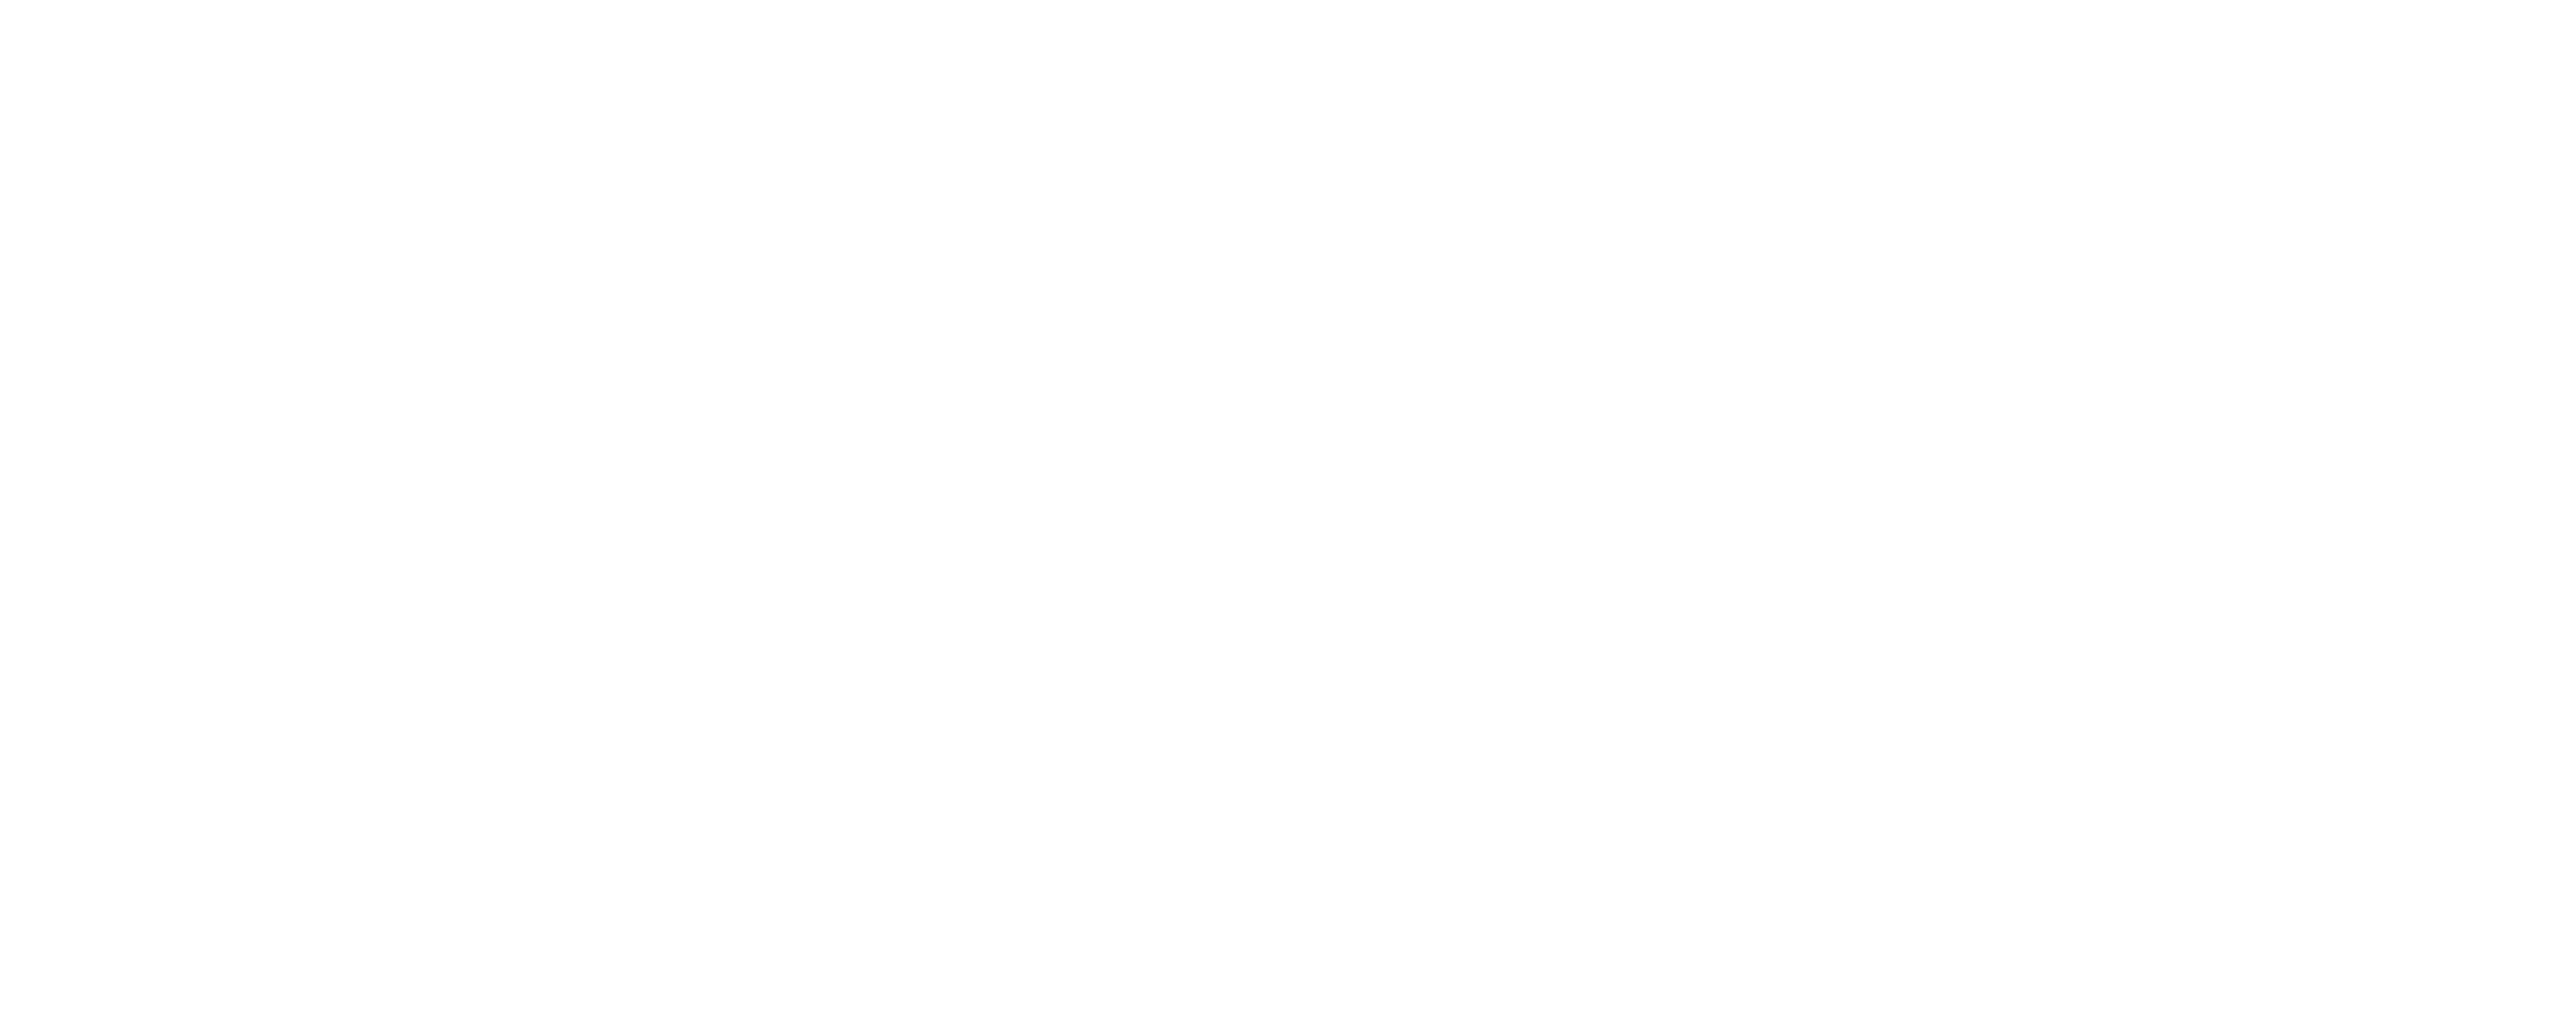 Grupo Cultural Jolgorio, AC